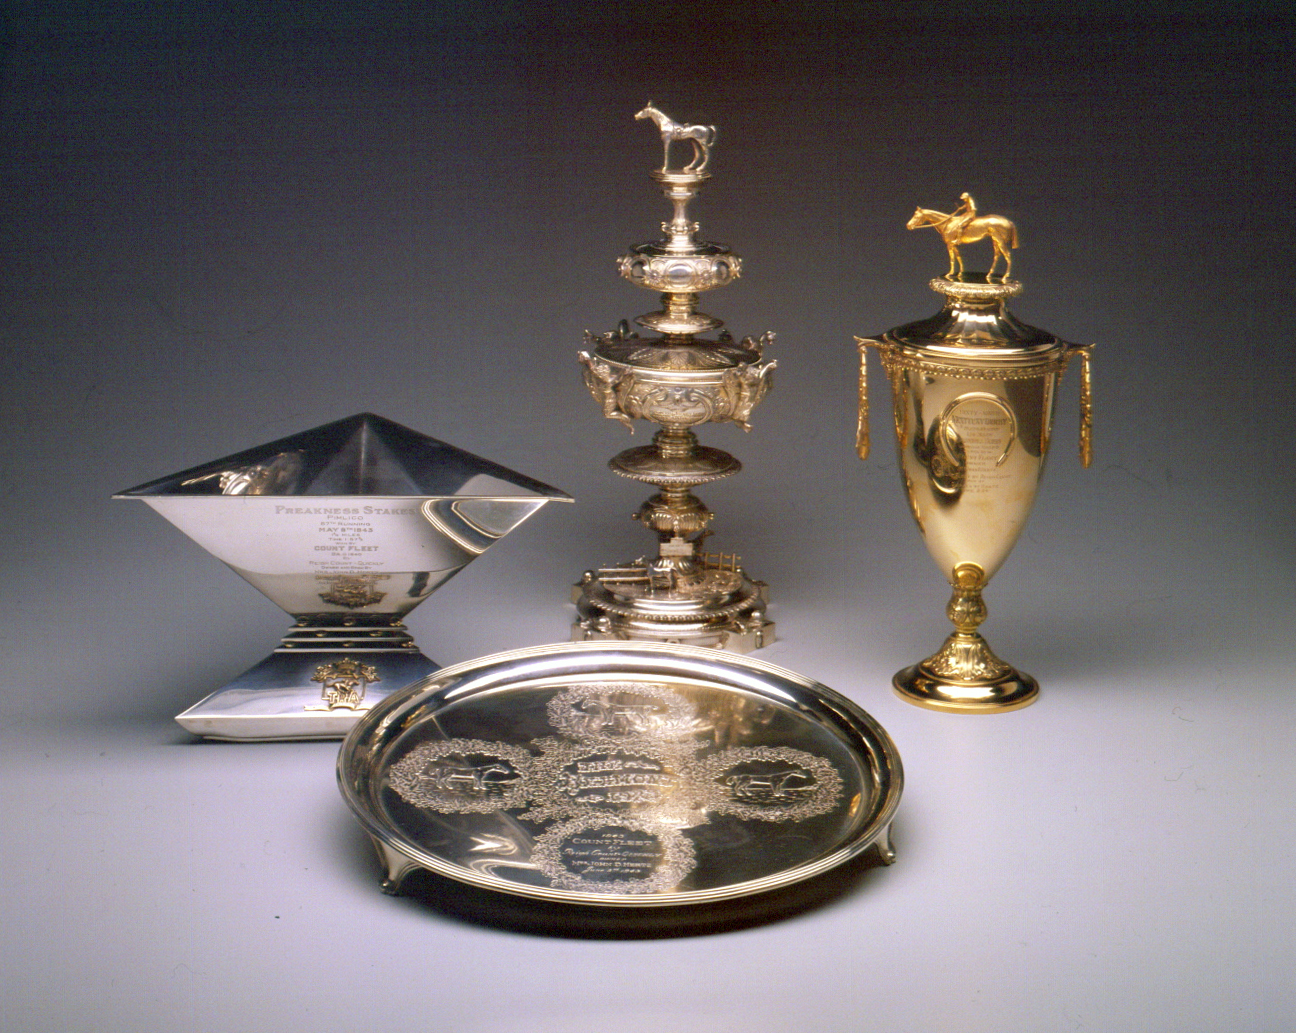 1971.3.1-.2, 1975.3.1-.2: The Triple Crown Trophies of Count Fleet 